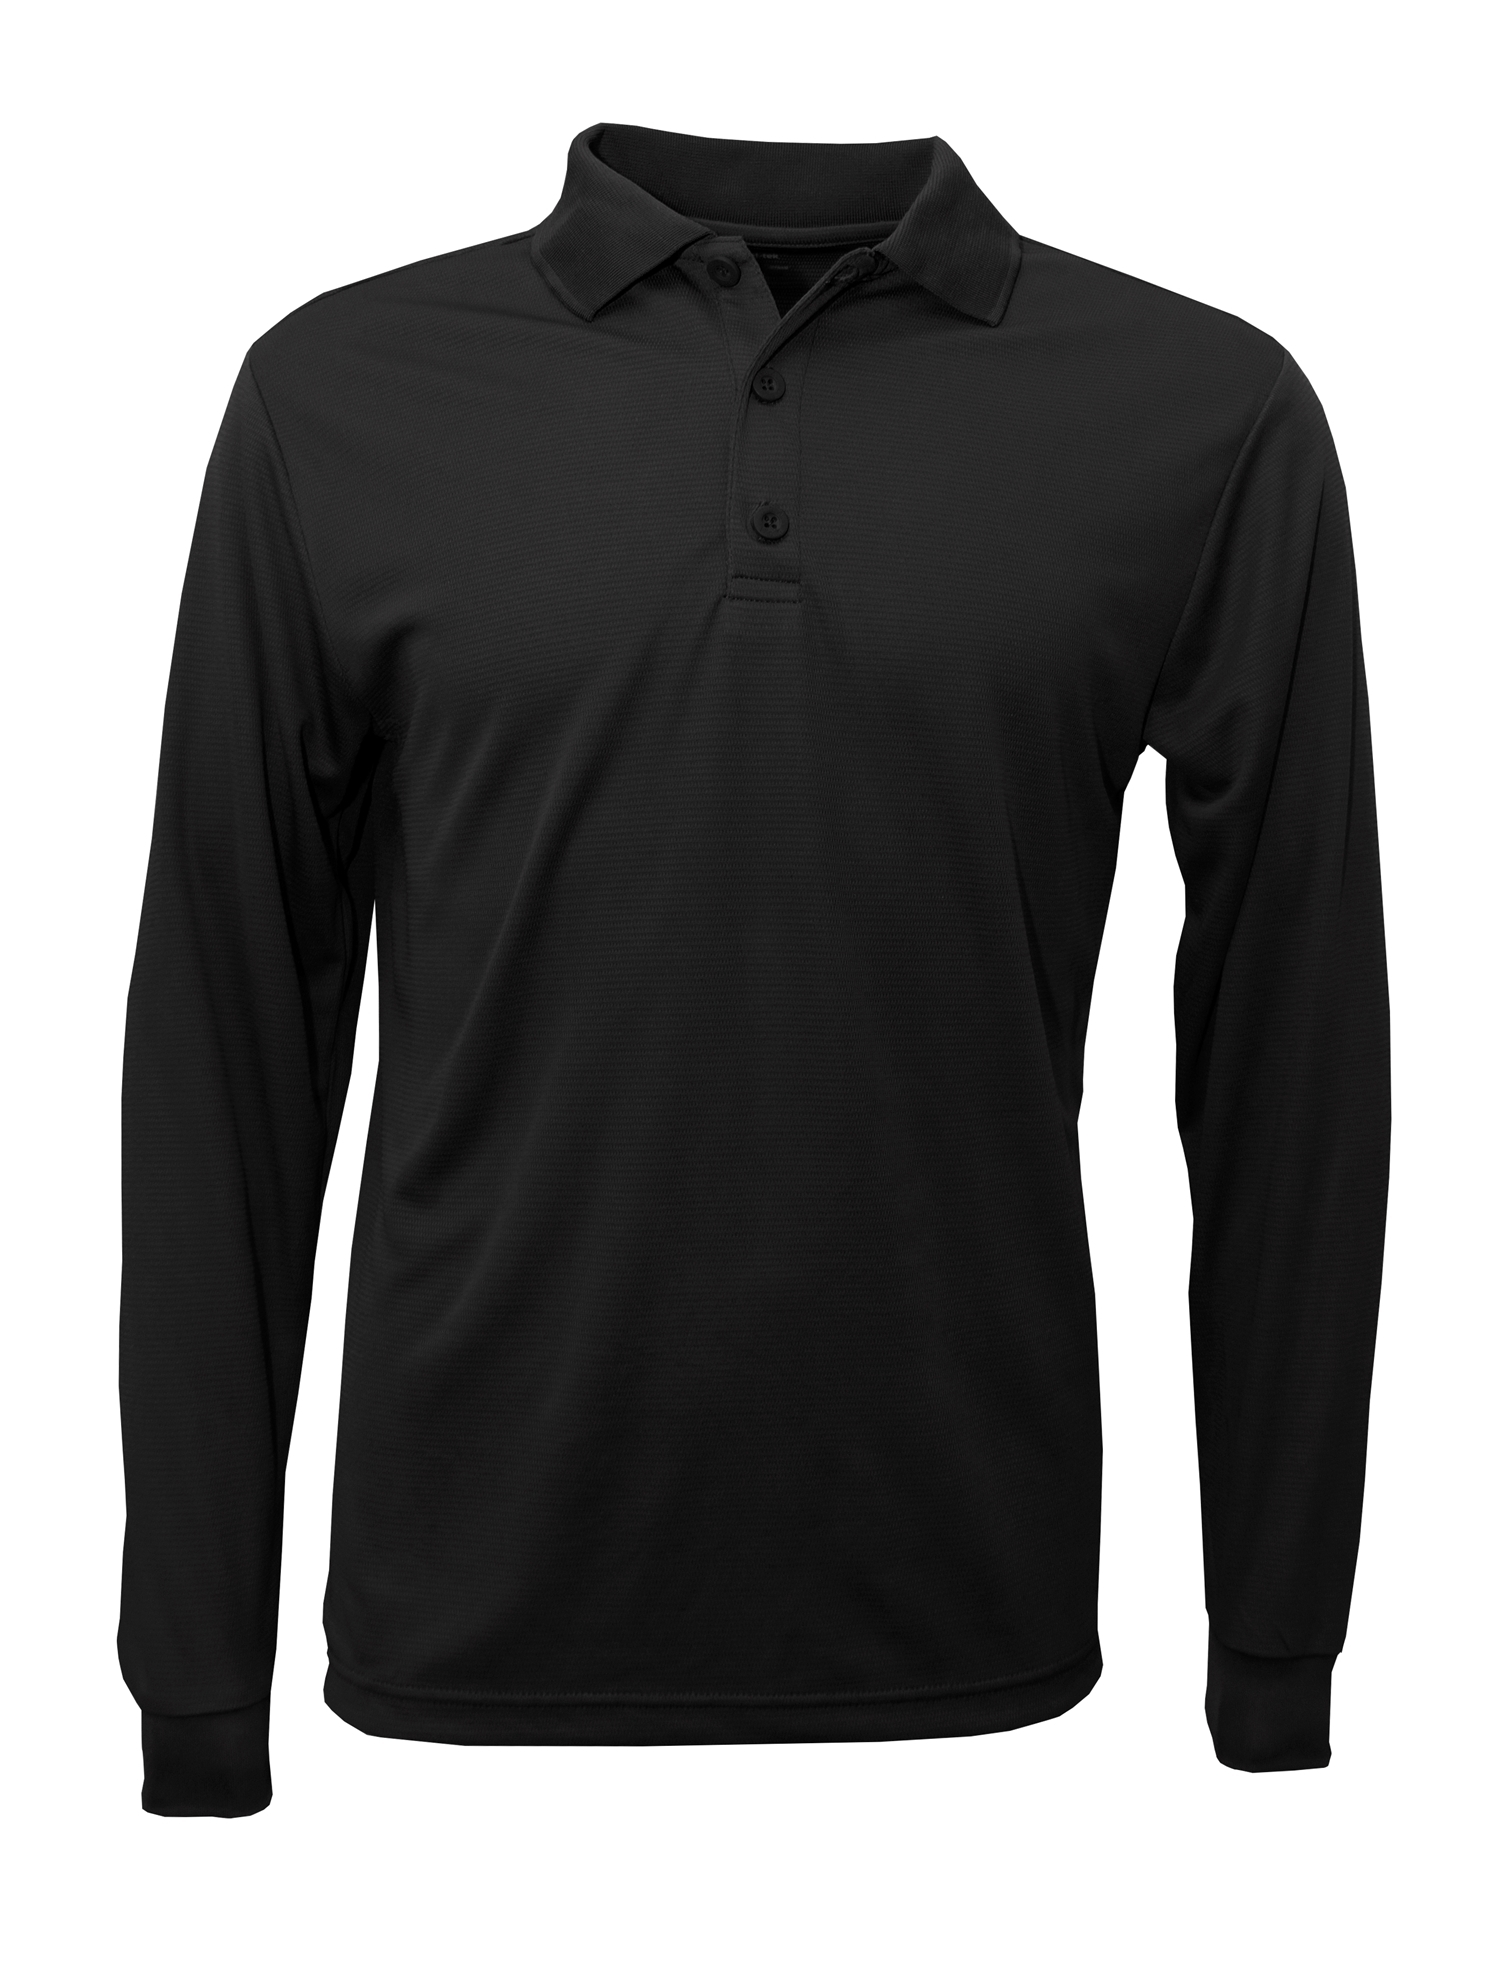 BAW Athletic Wear EC409 - Men's Cool-Tek Long Sleeve Shirt